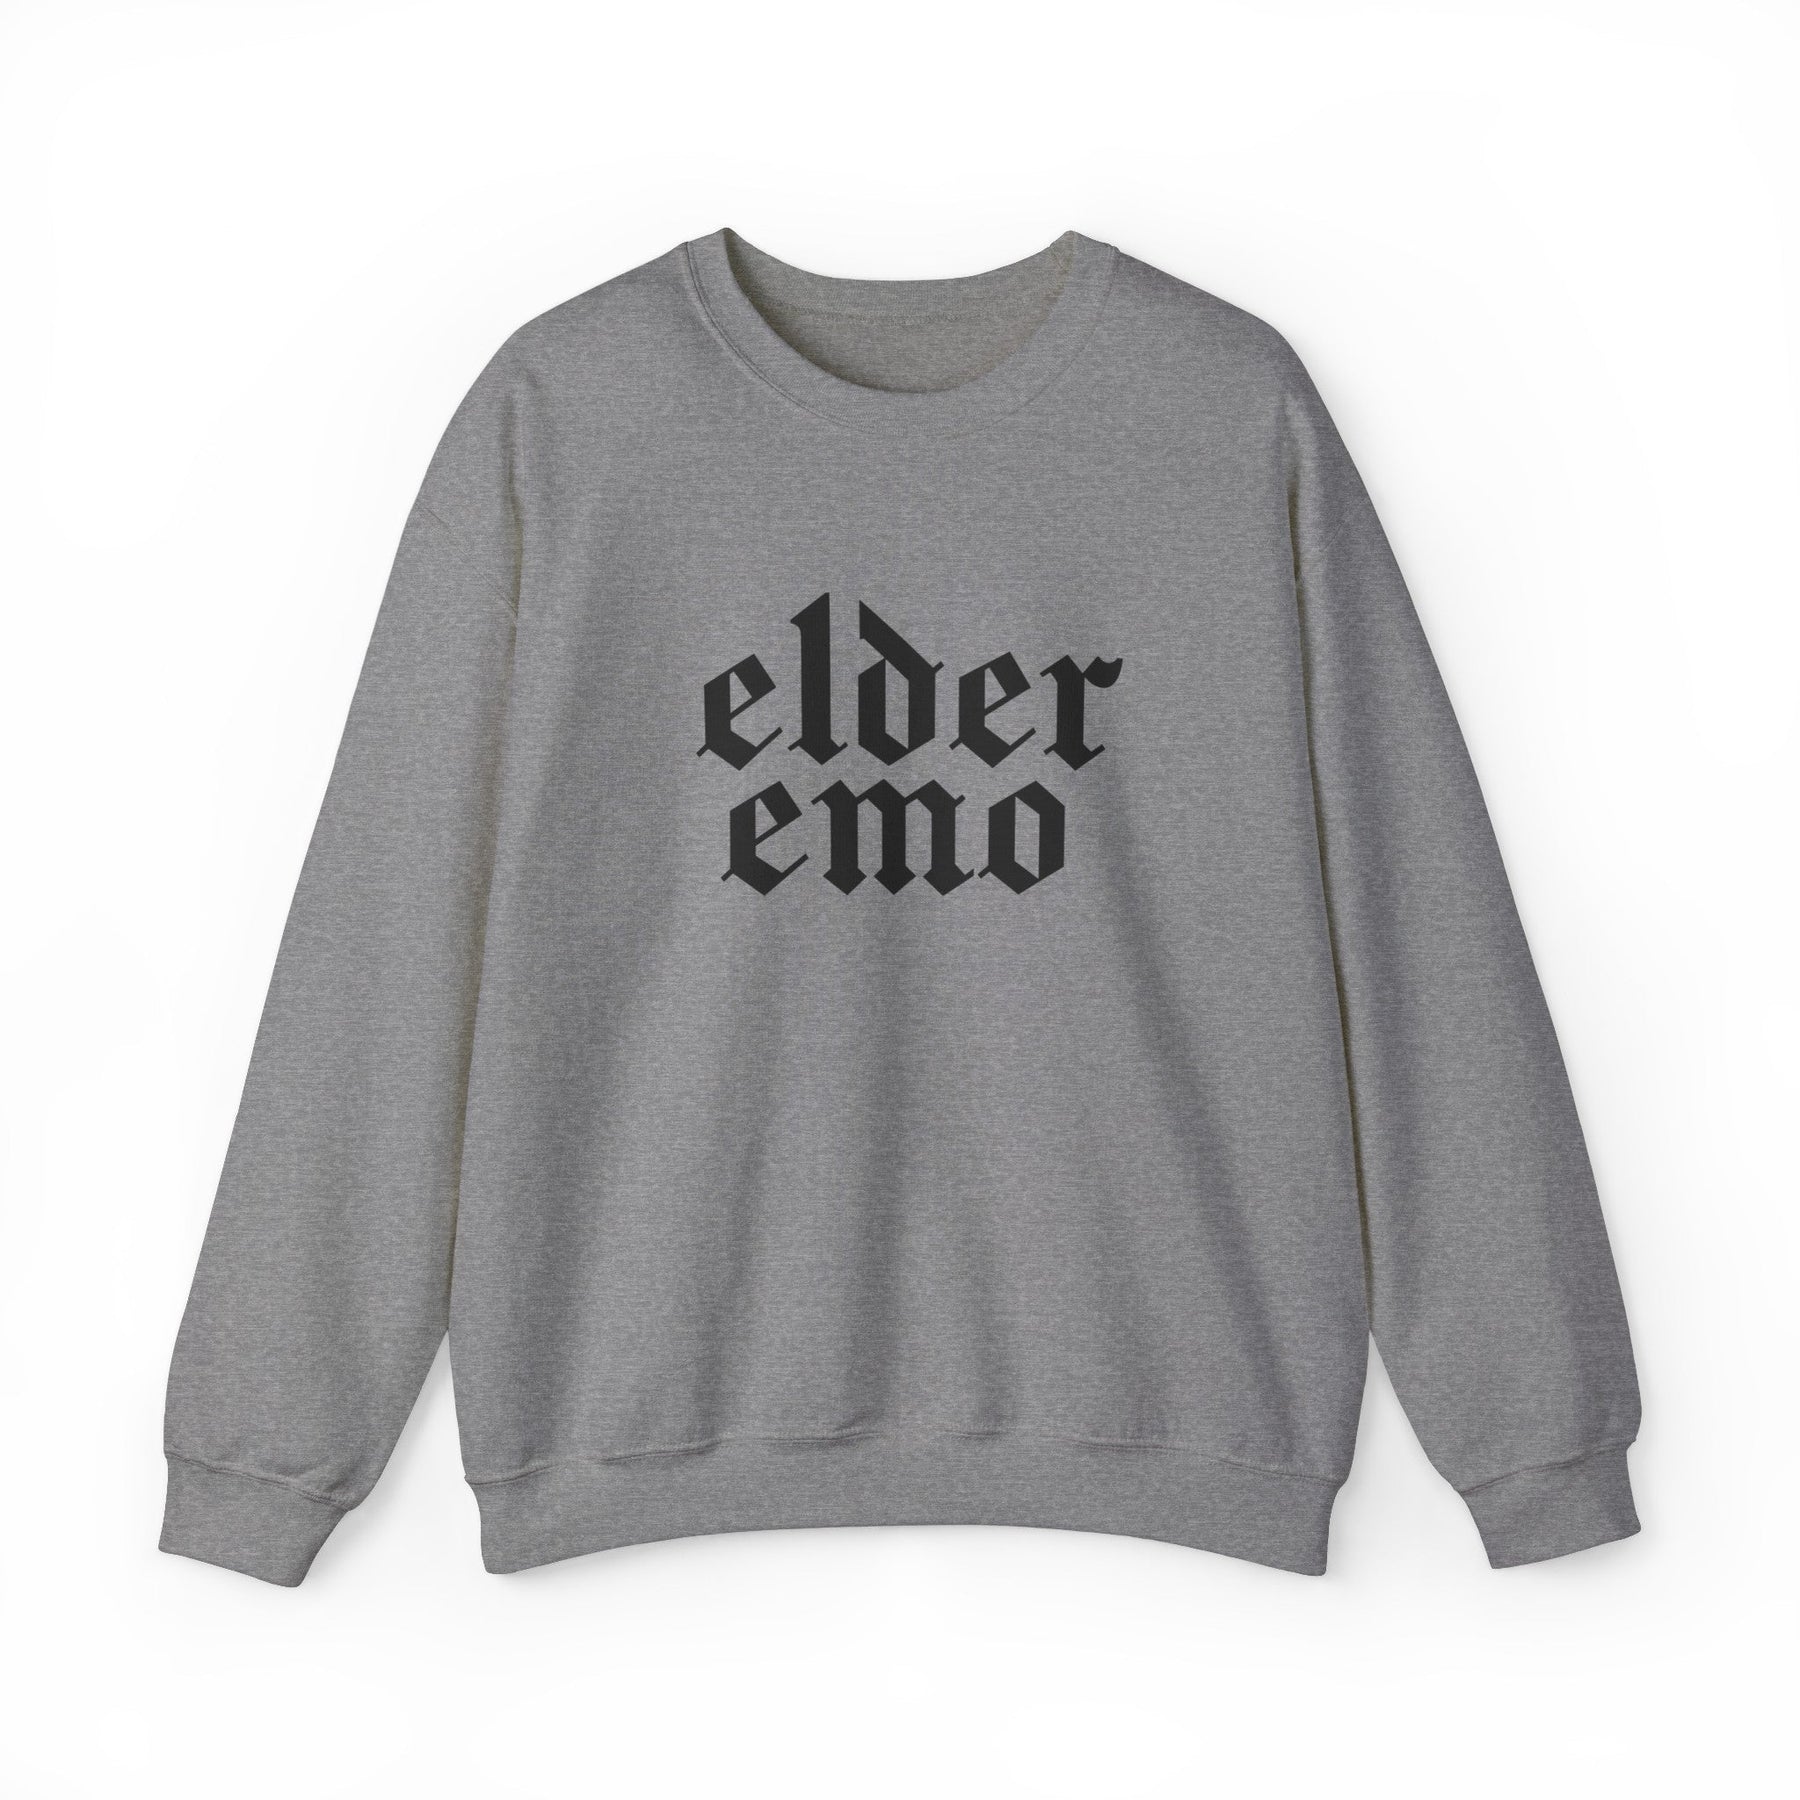 Elder Emo Gothic Font Crewneck Sweatshirt - Goth Cloth Co.Sweatshirt65203913617209803260